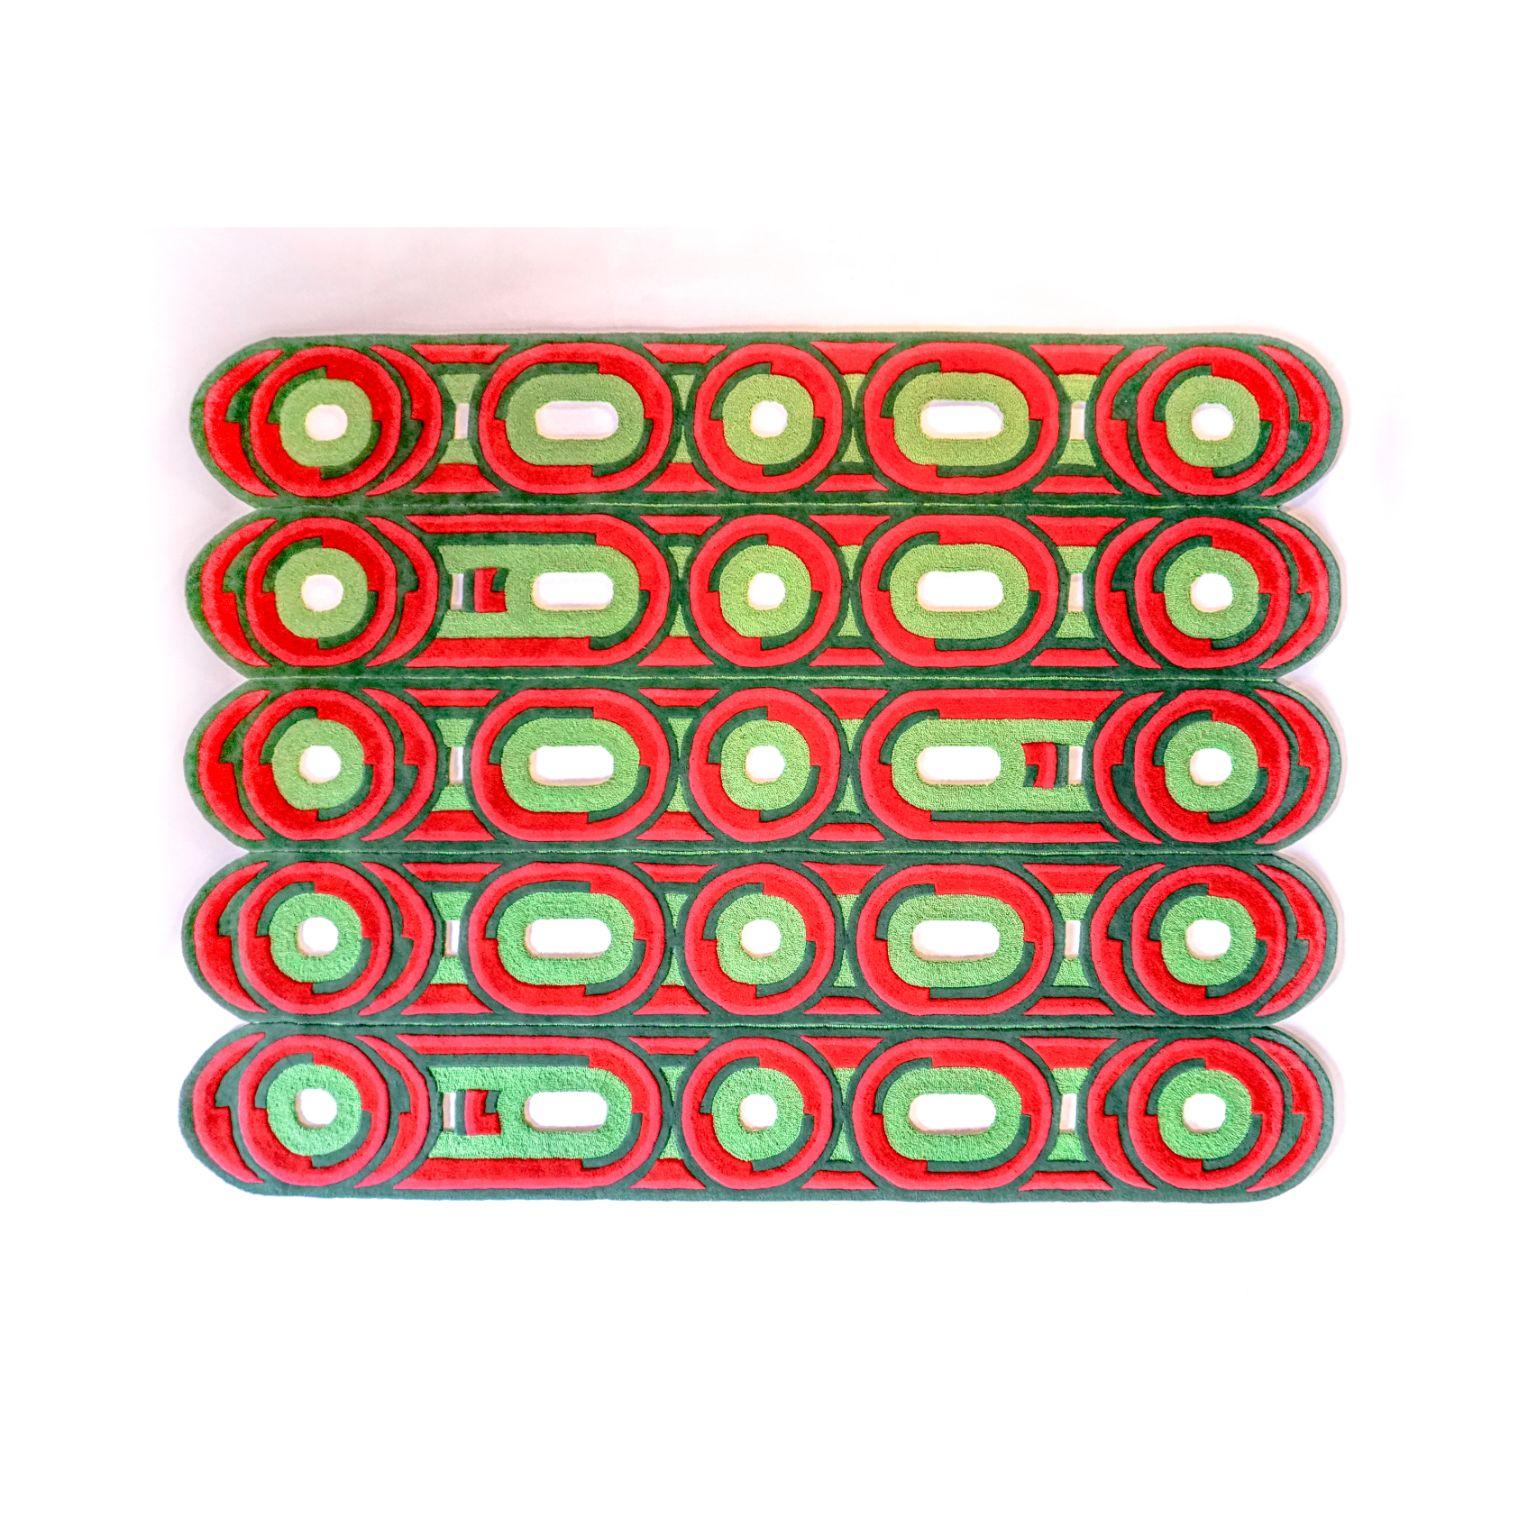 Tuna rug by Lilia Cruz Corona Garduño
Series: White
Dimensions: 7.6'' x 5.6